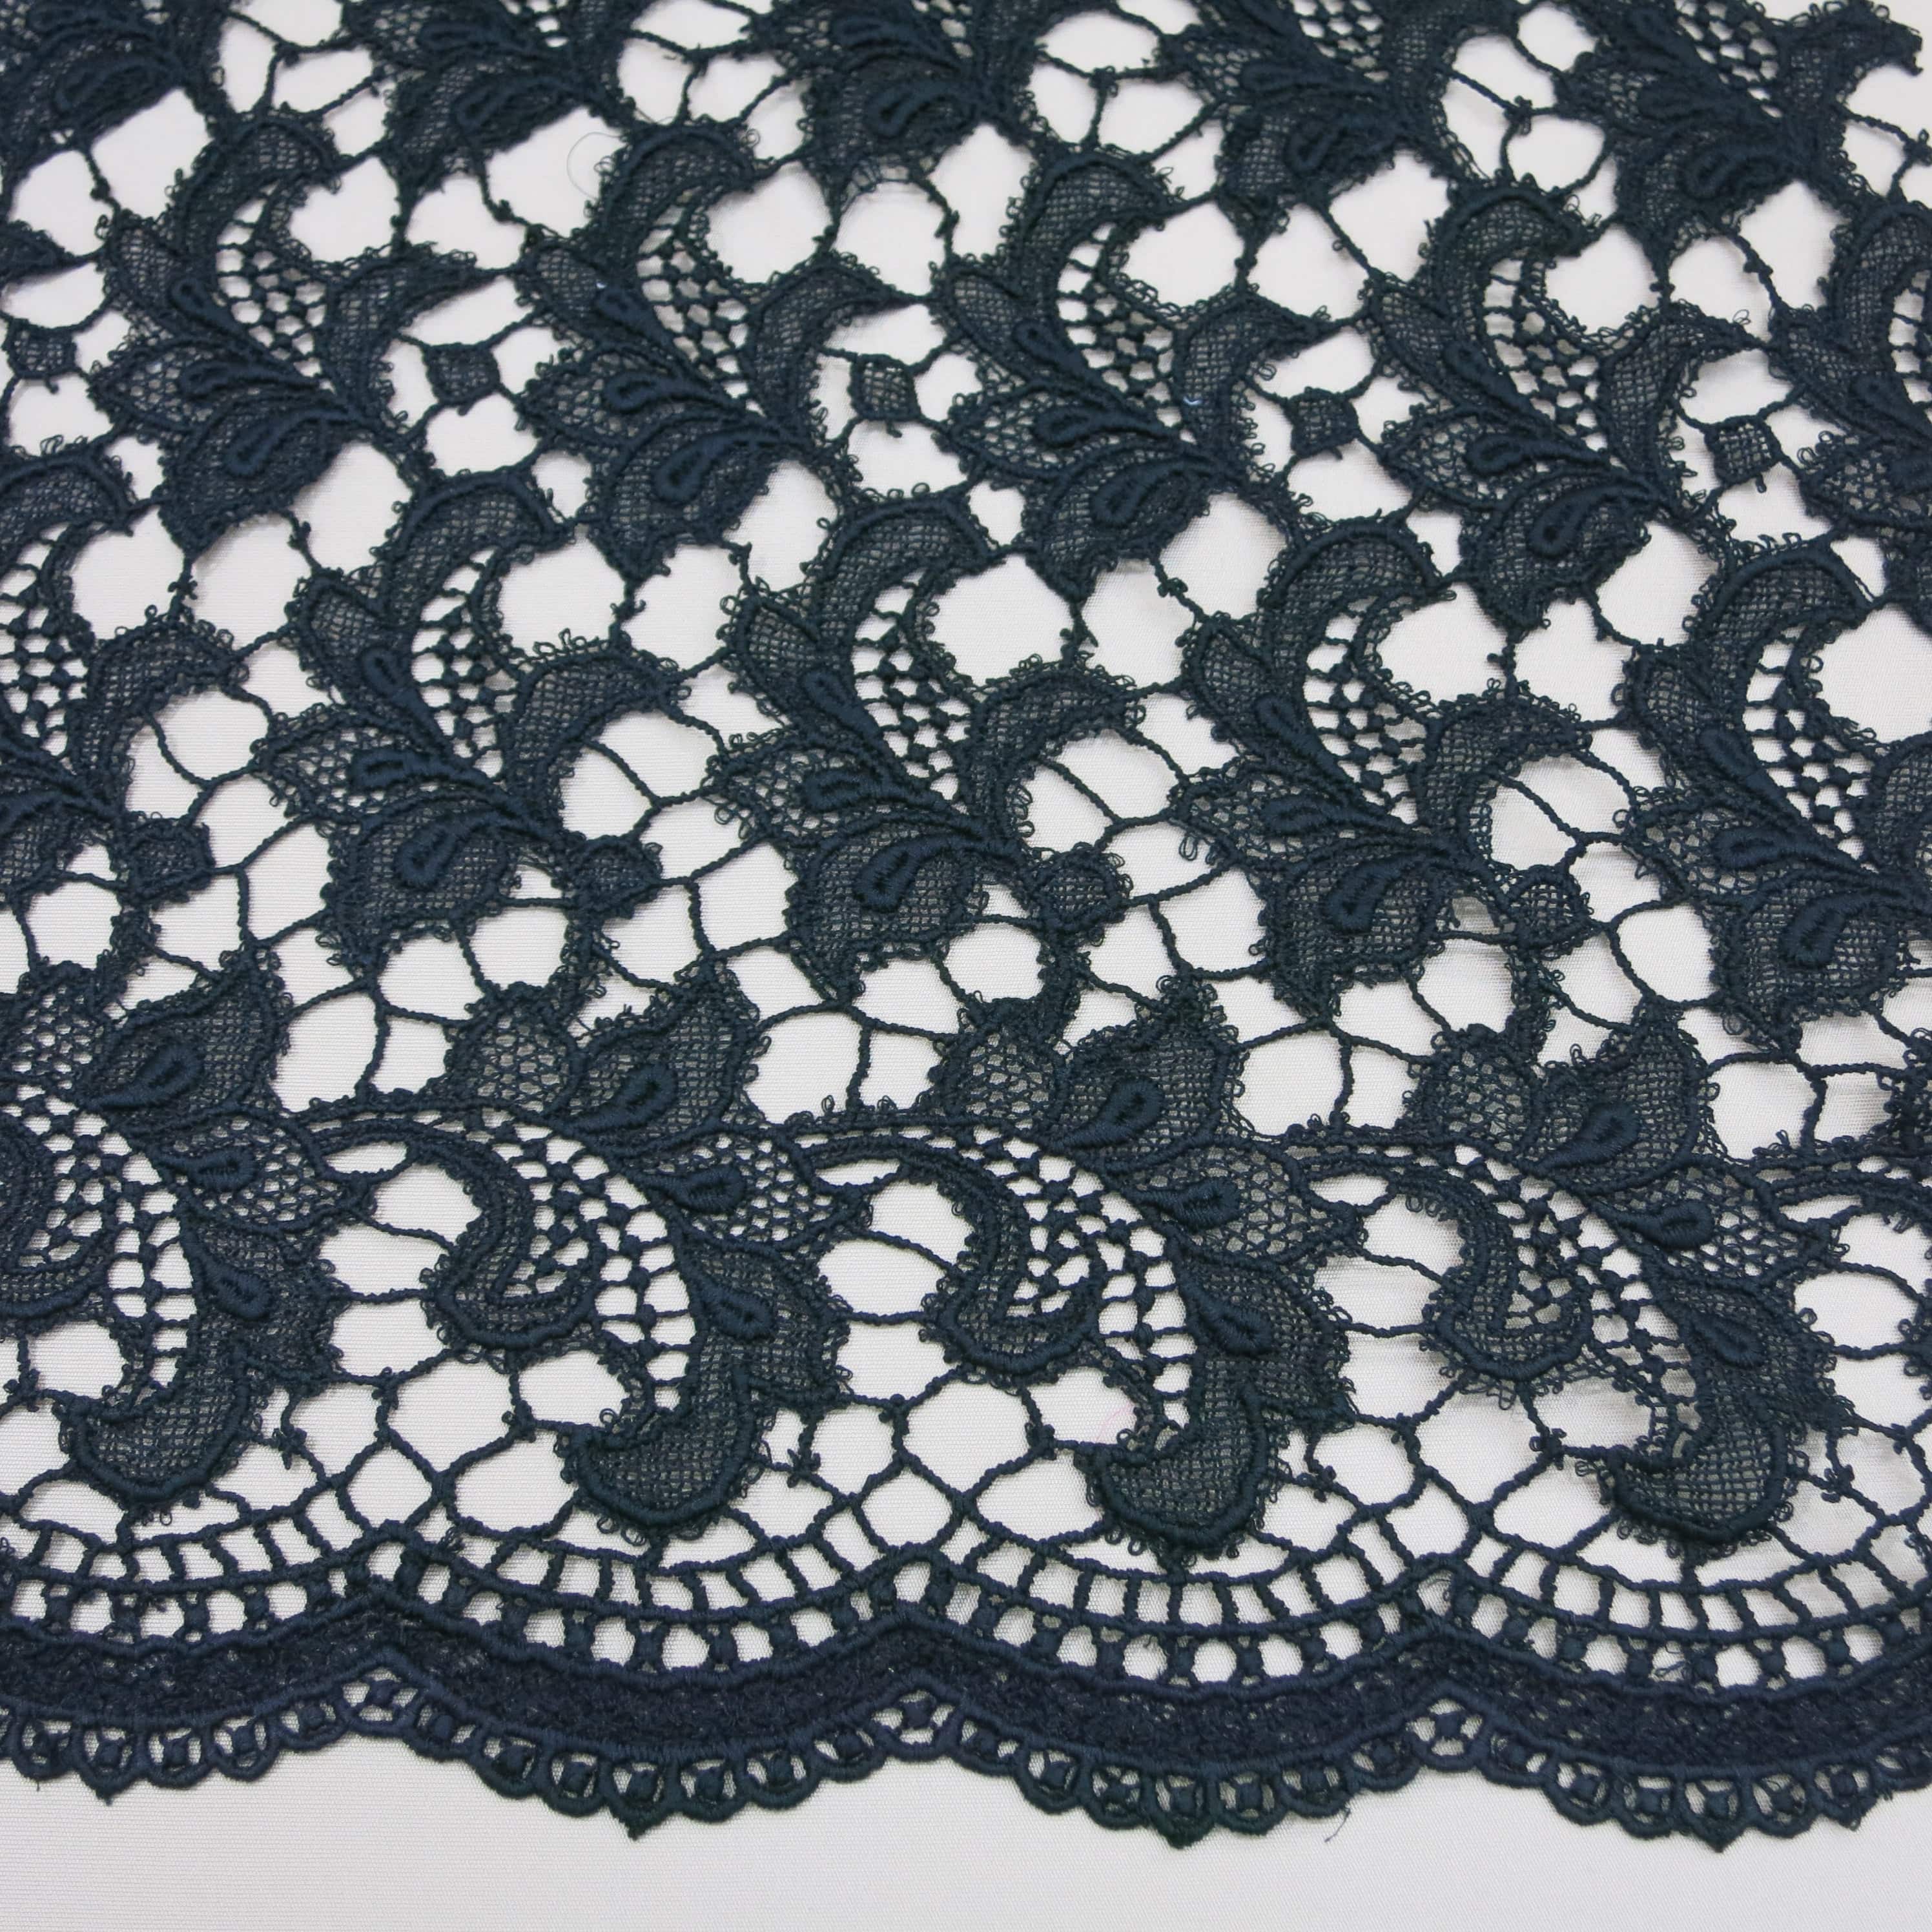 Dark green cotton guipure lace fabric - Guipure lace - lace fabric